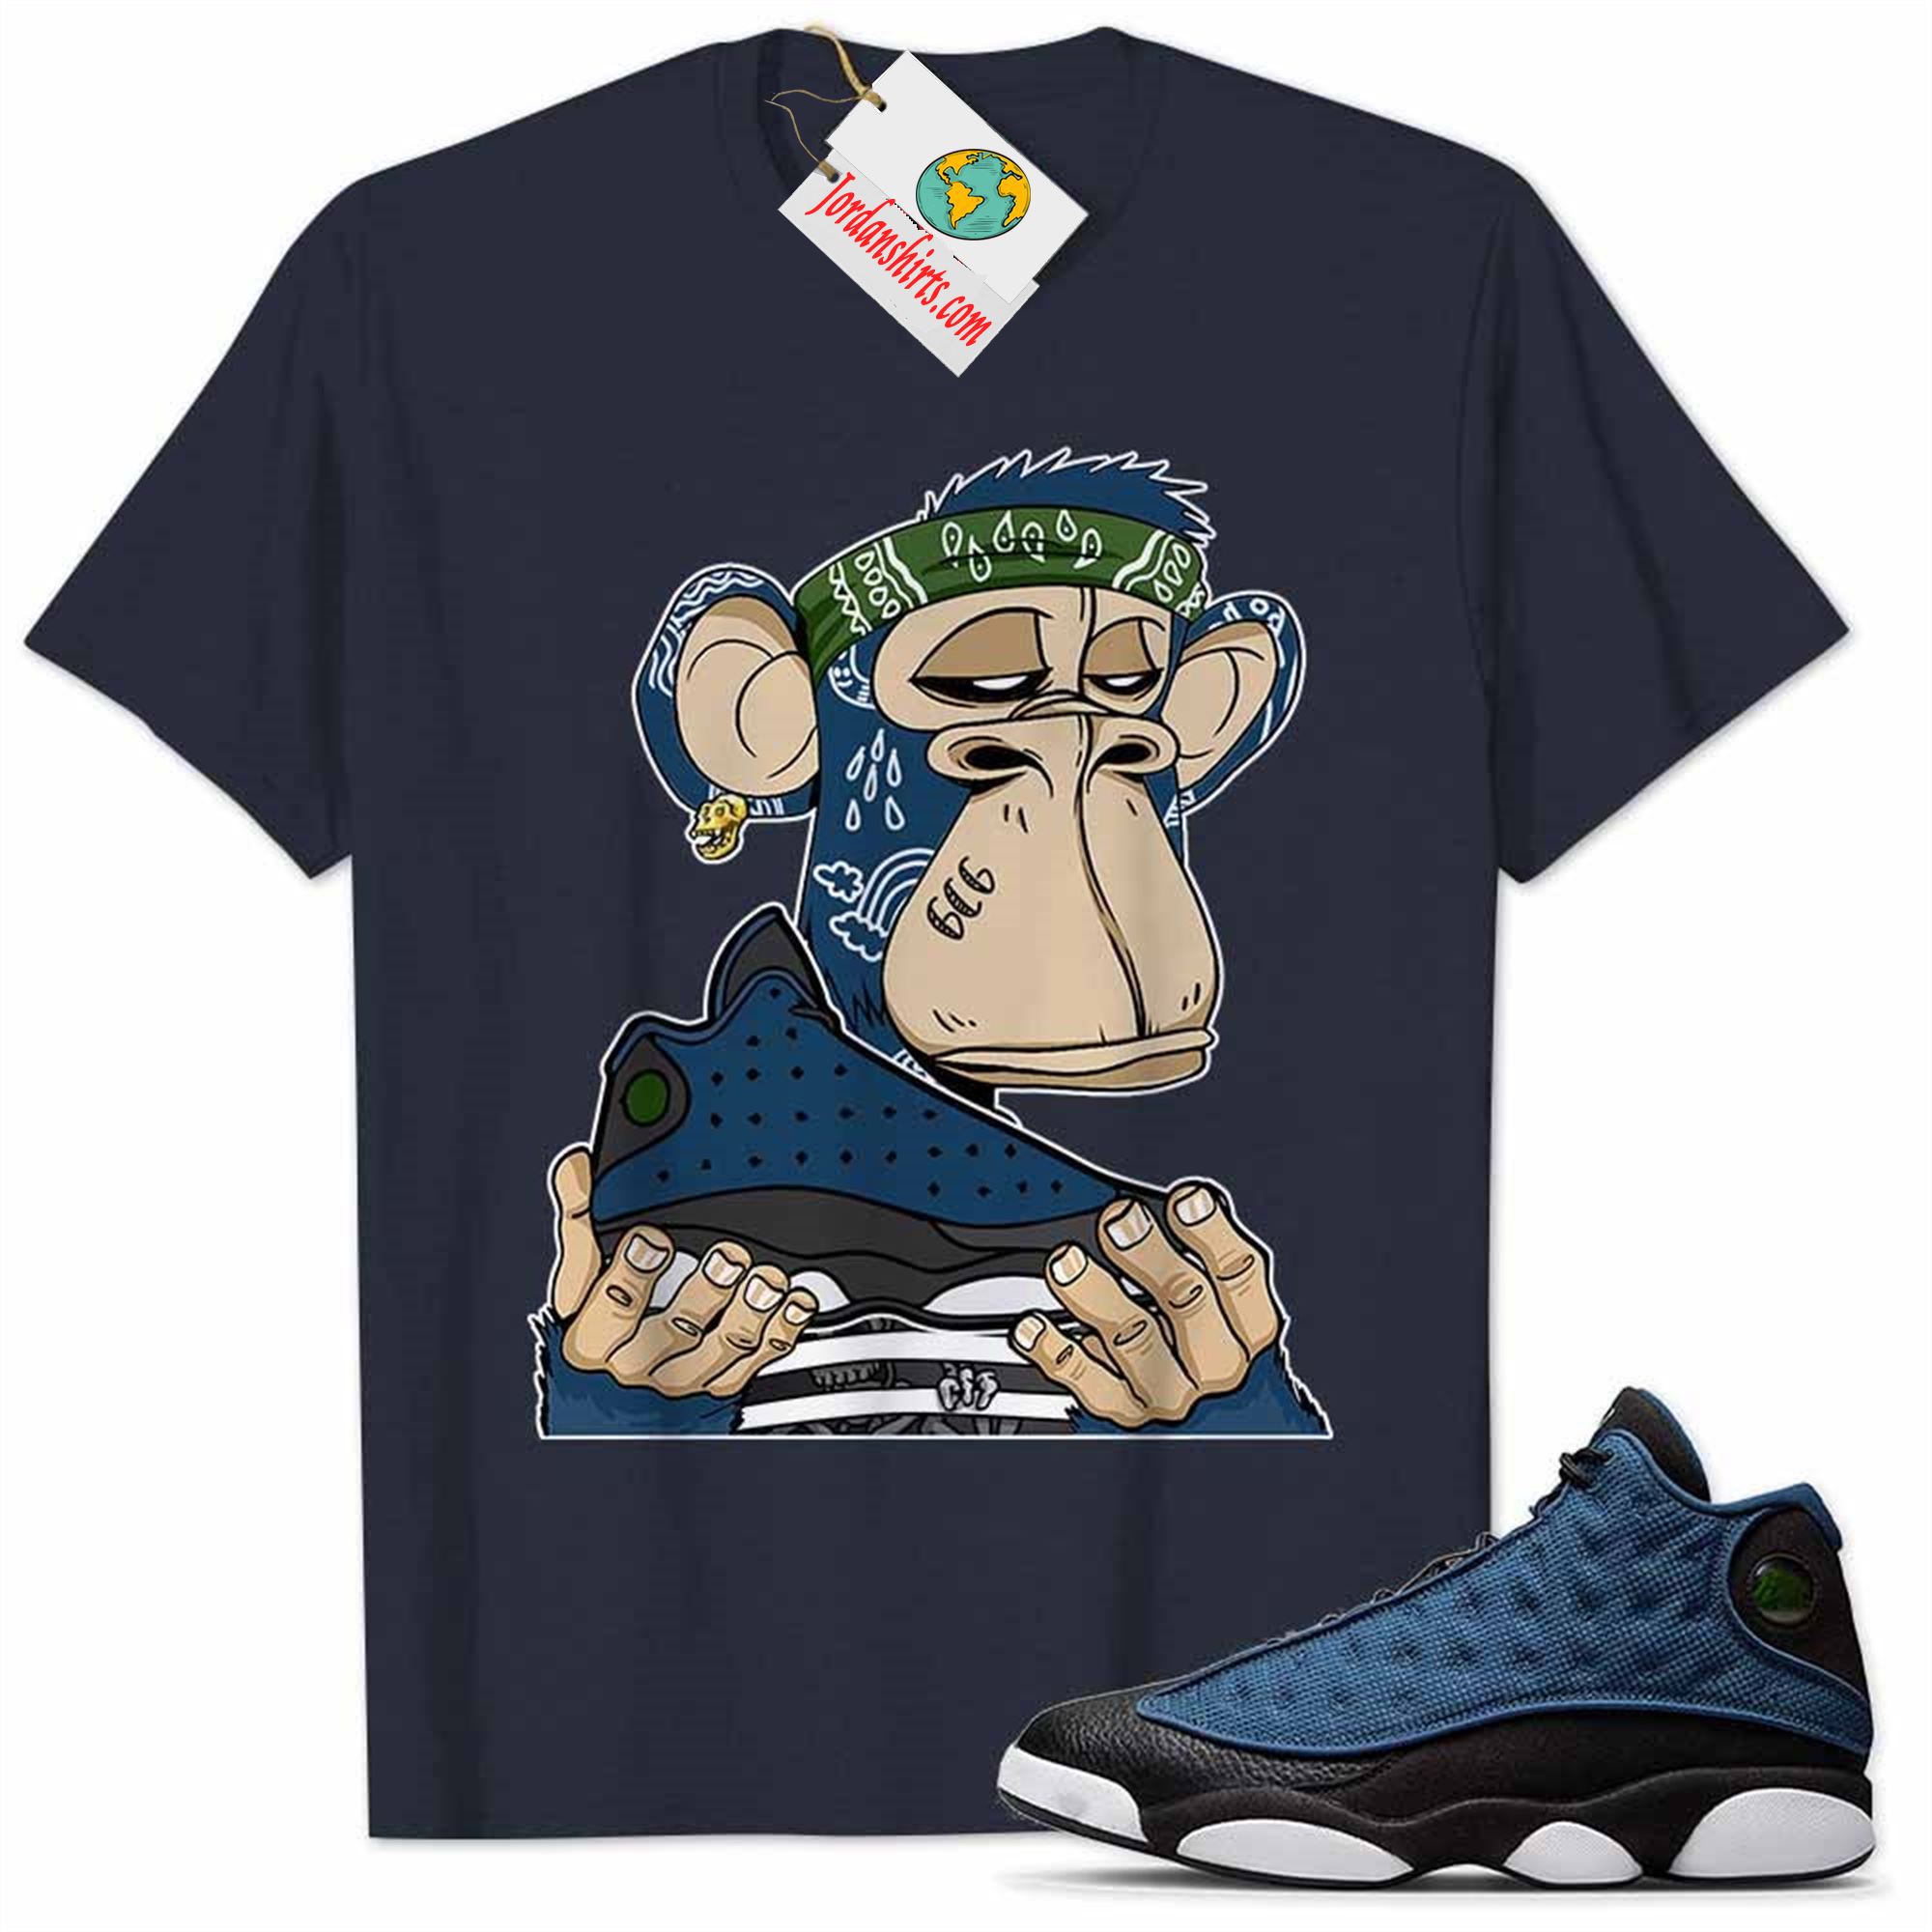 Jordan 13 Shirt, Jordan 13 Brave Blue Shirt Bored Ape Monkey Got Em Navy Size Up To 5xl